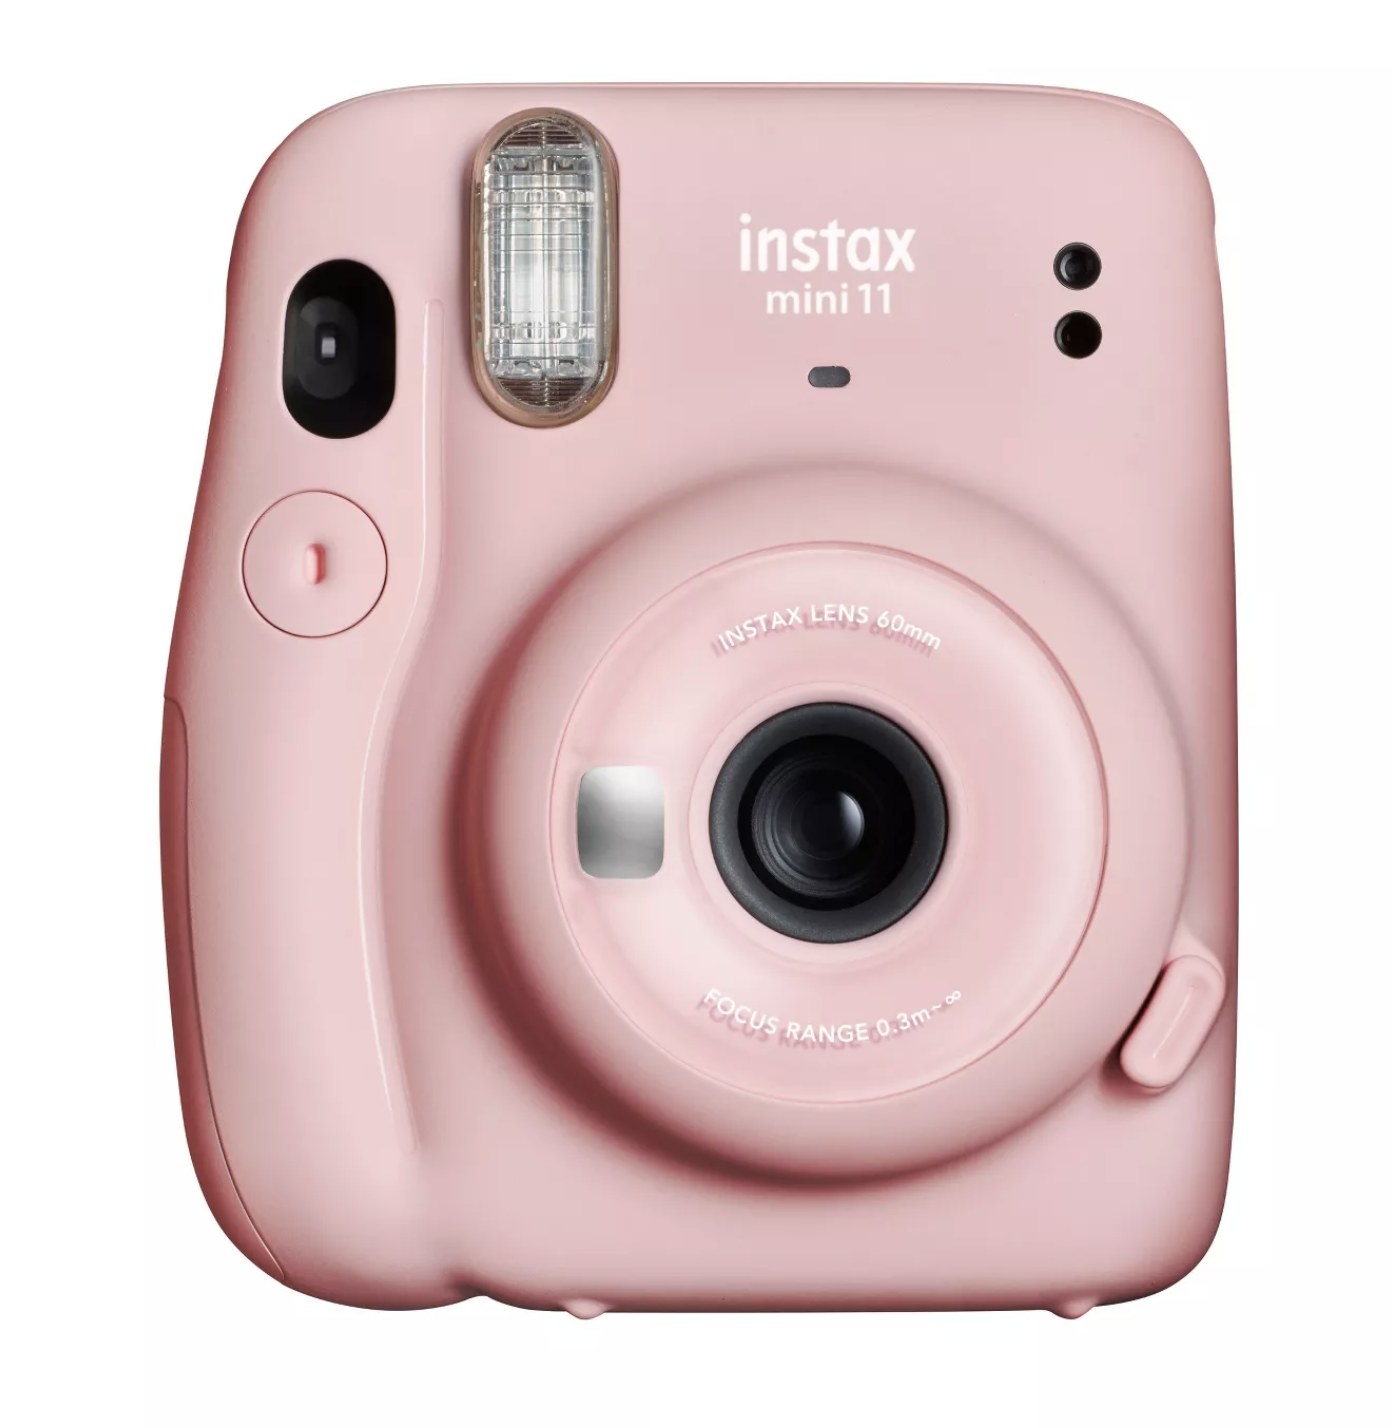 The pink Instax mini camera